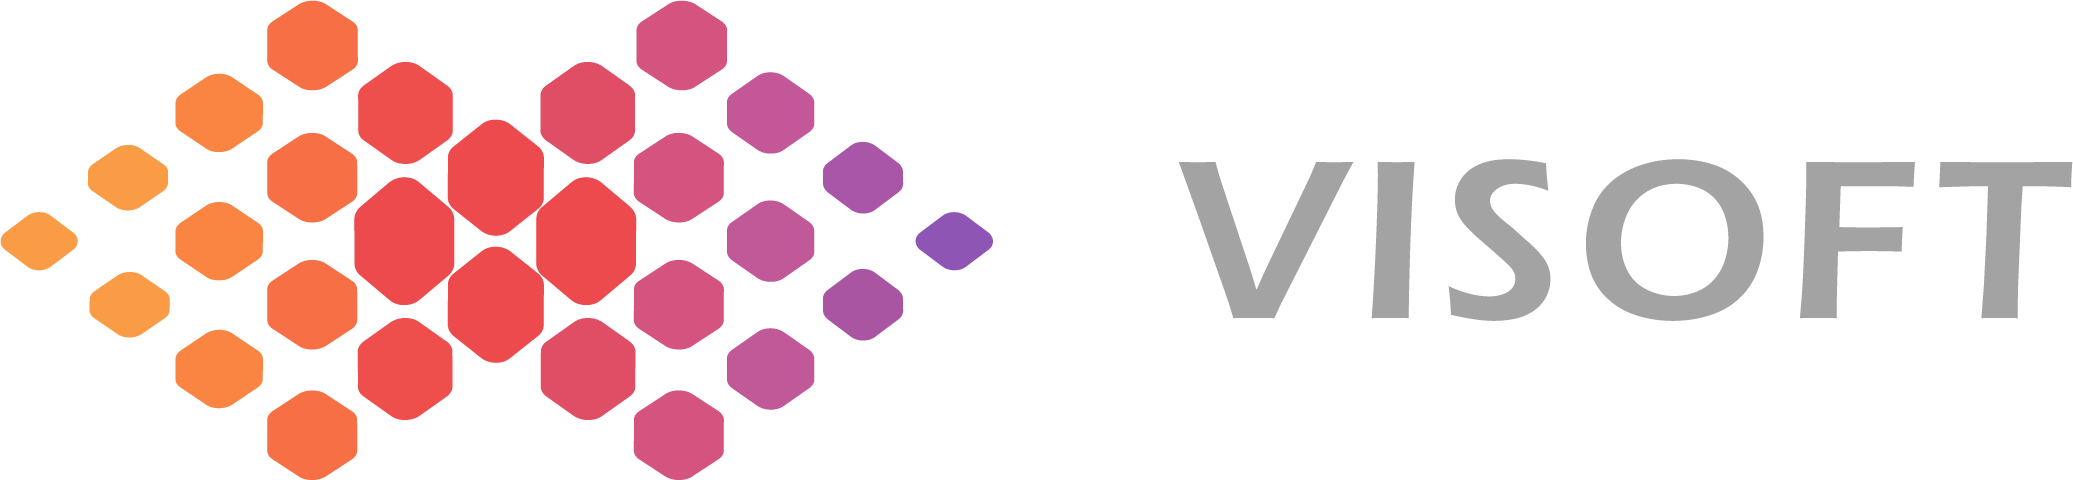 visoft logo